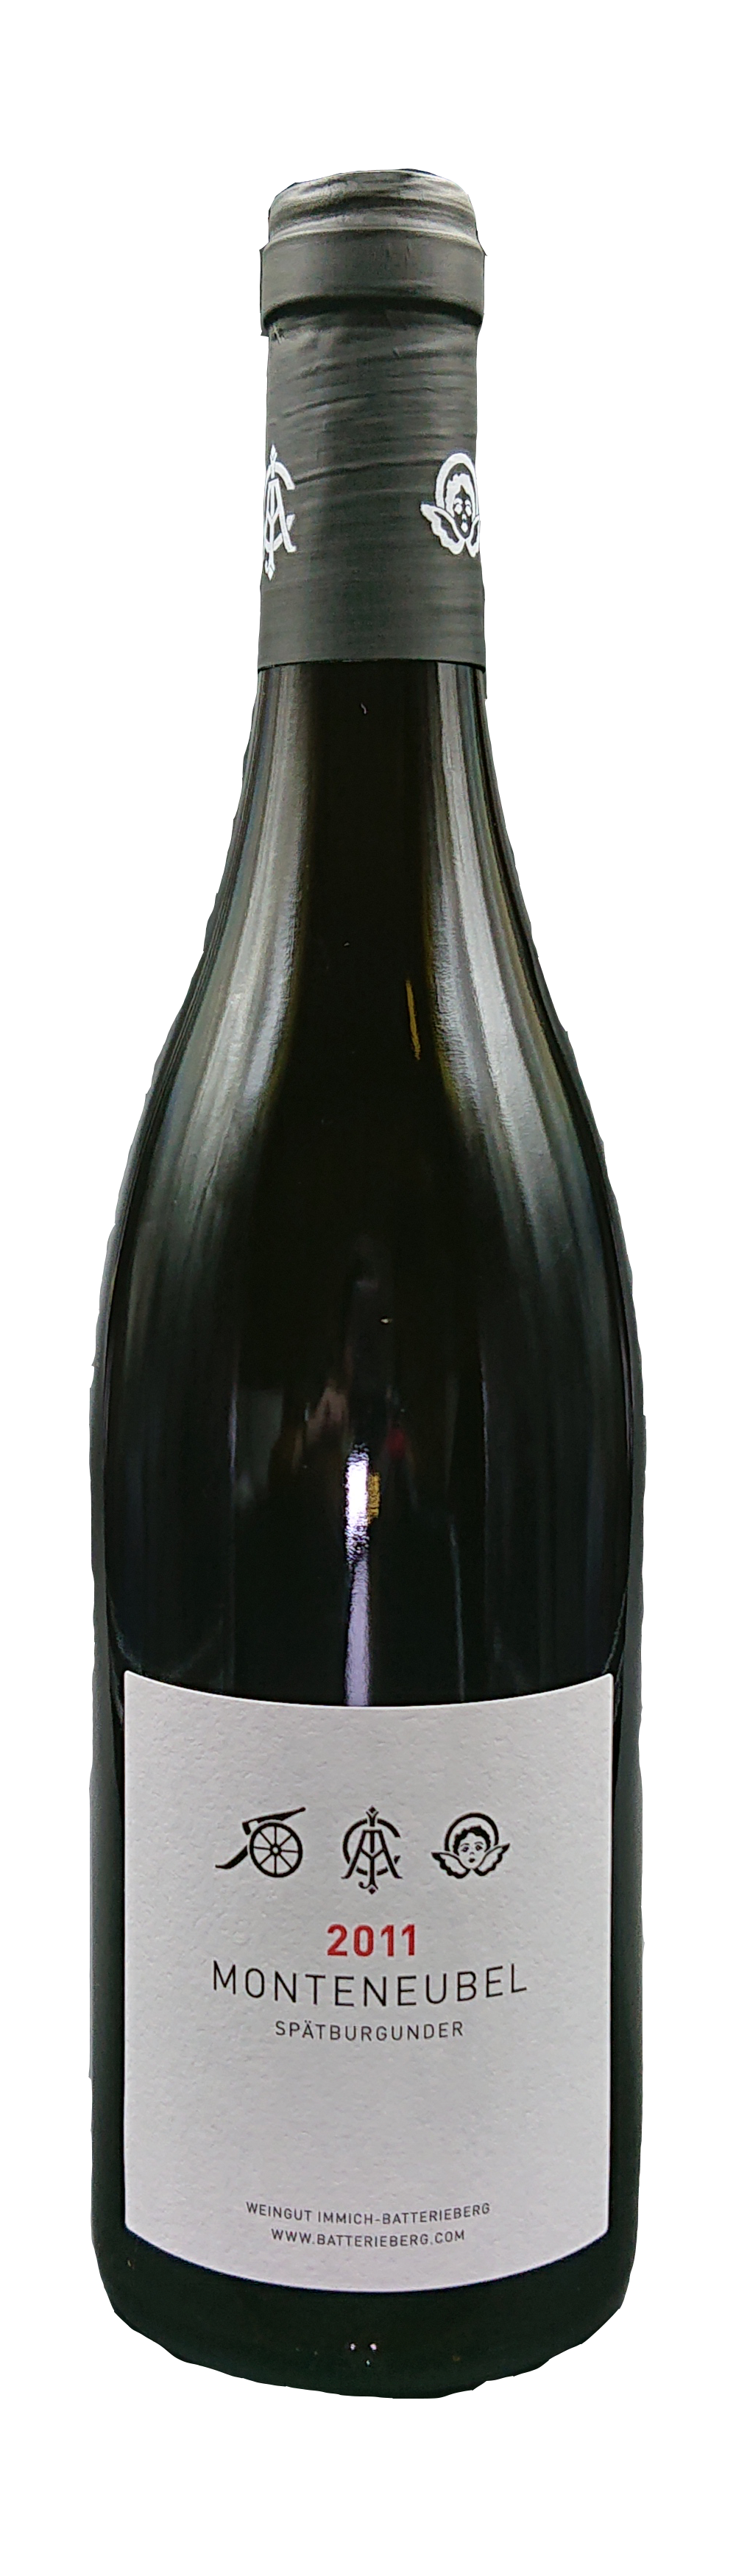 Weingut Immich-Batterieberg "Enkircher Monteneubel" SpatBurgunder(Pinot Noir) 2011